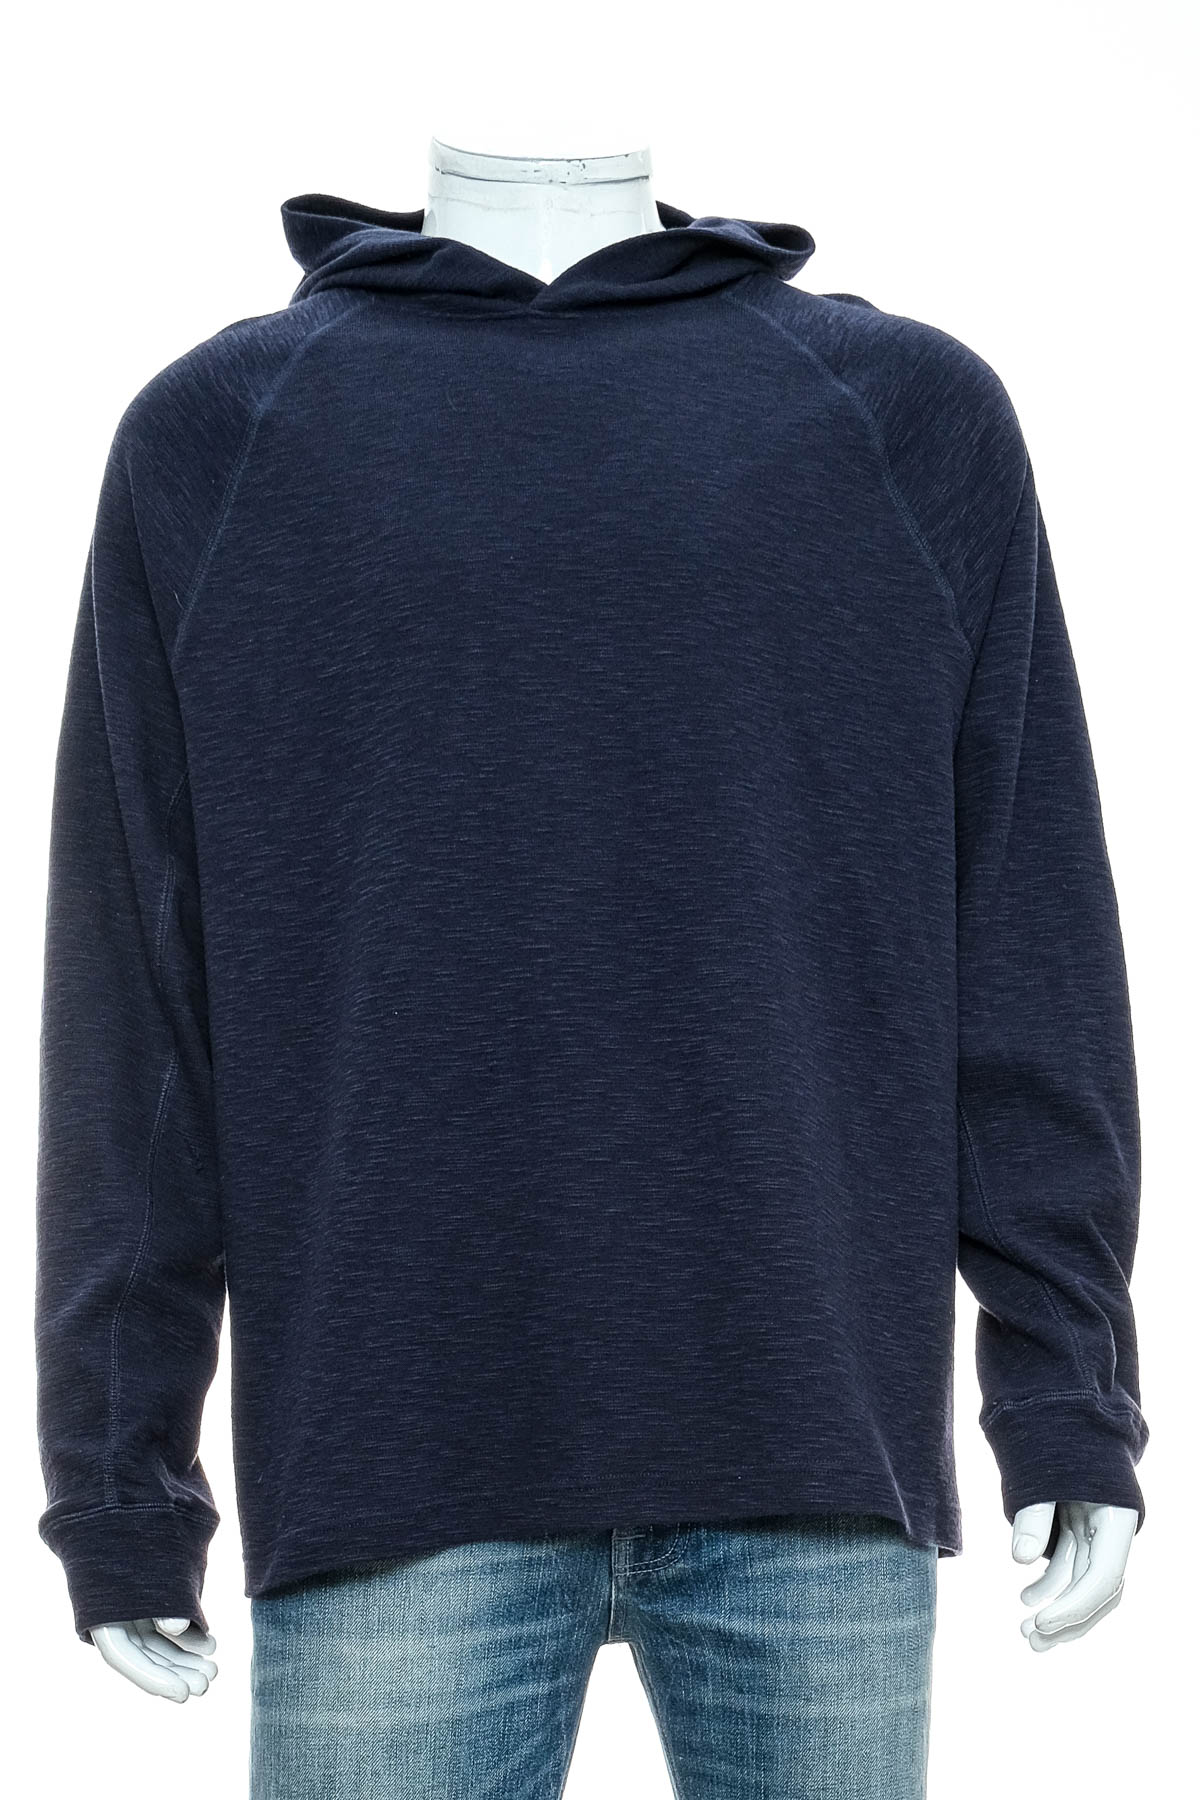 Men's sweater - APT. 9 - 0